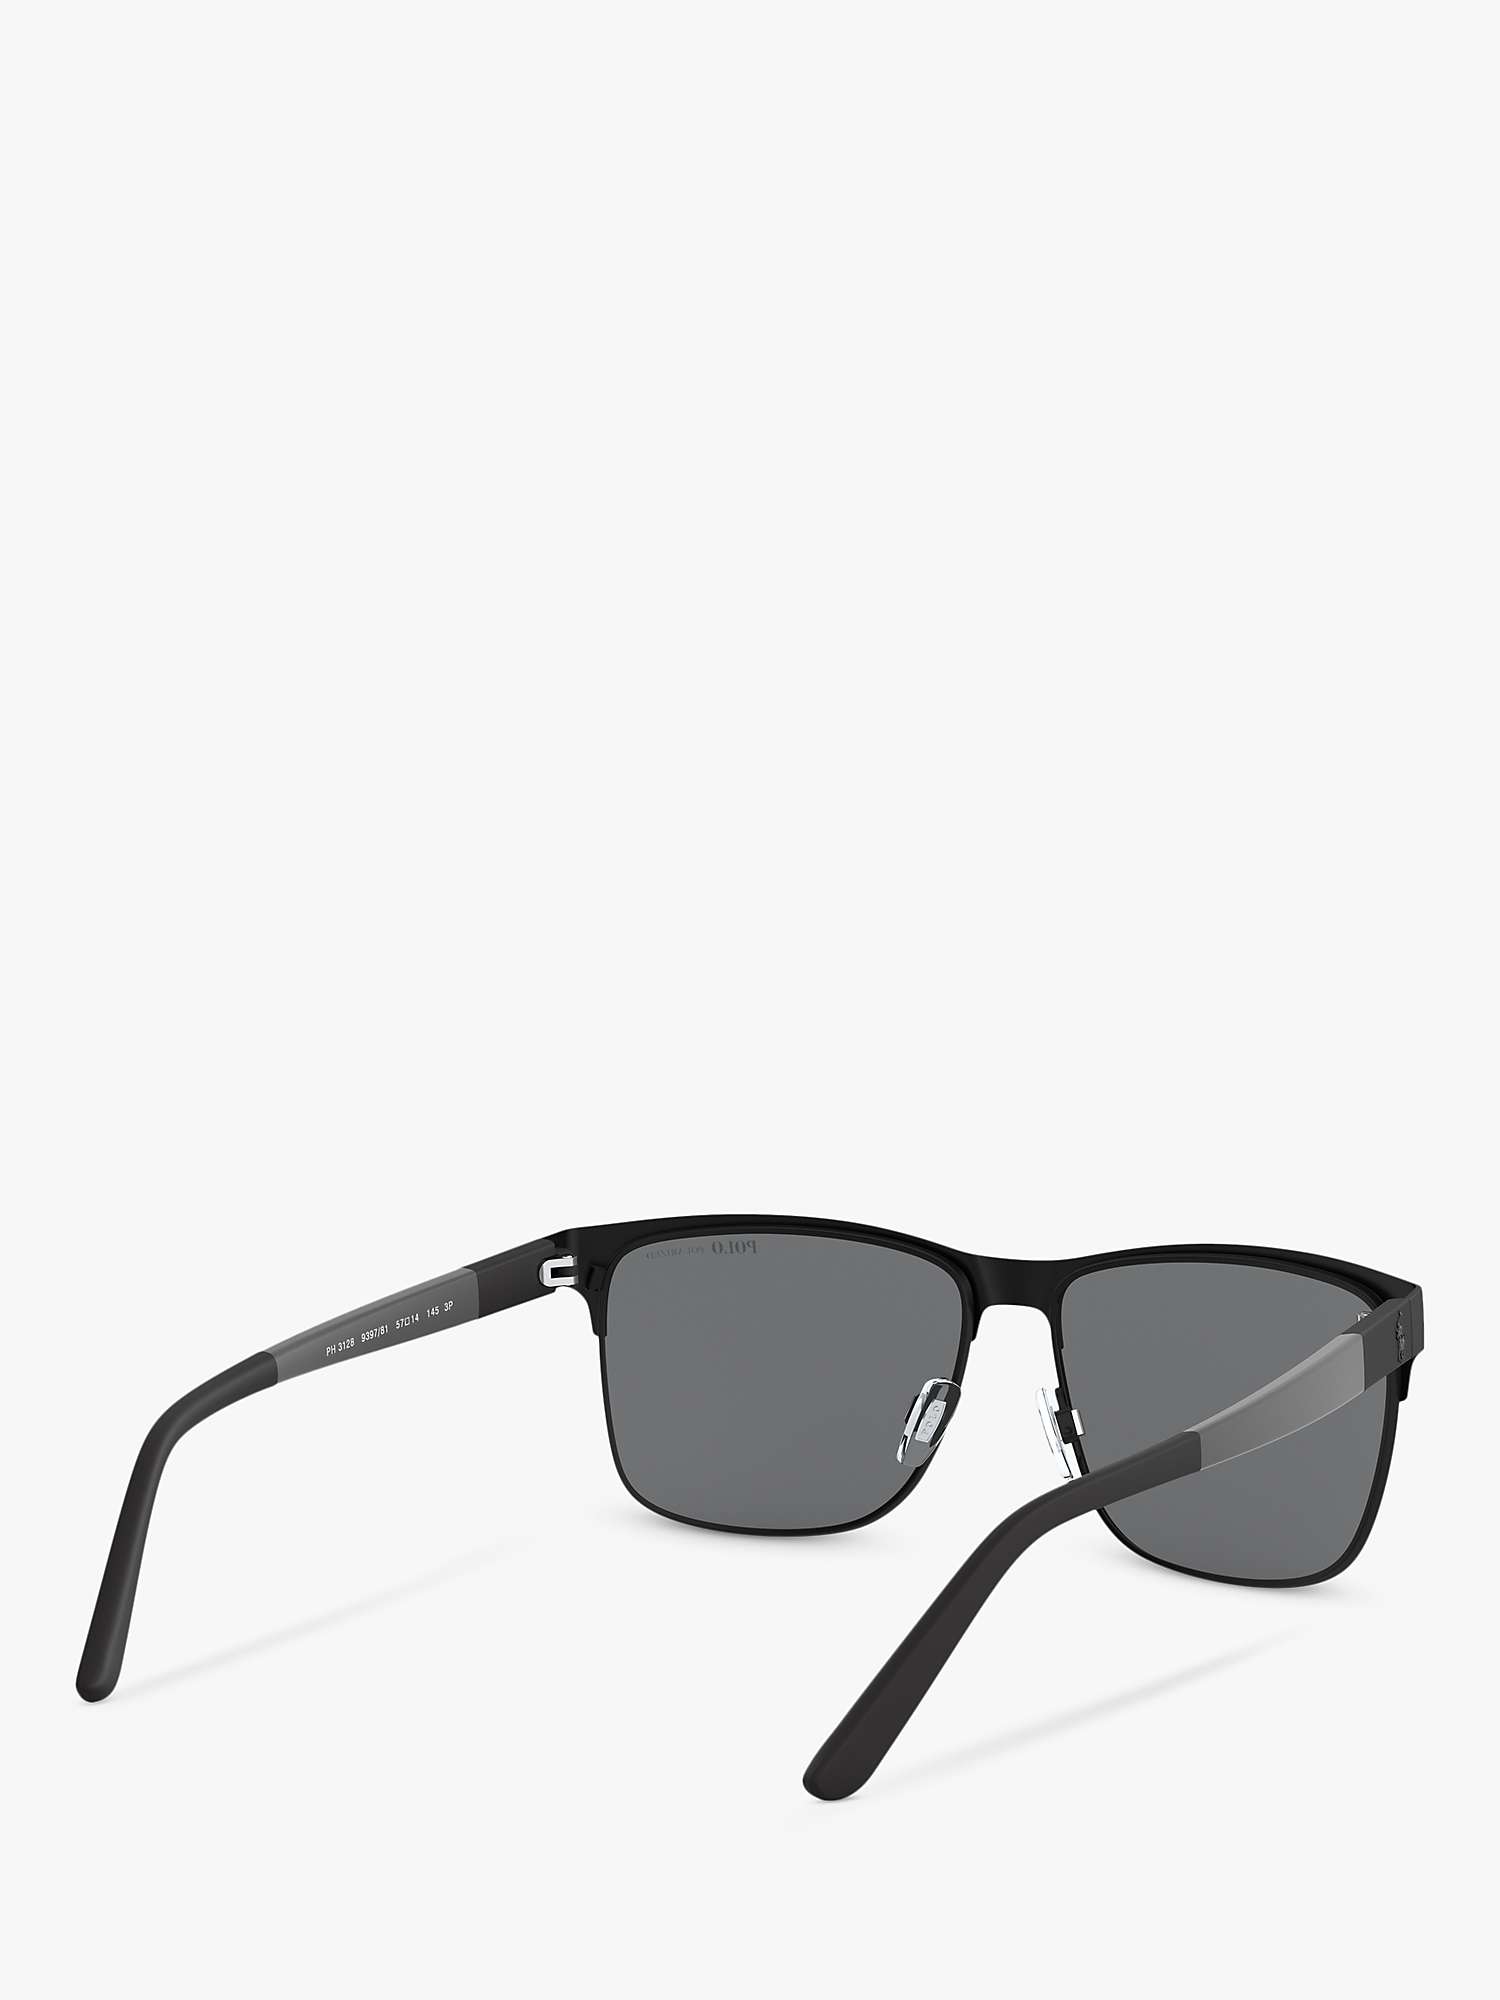 Buy Ralph Lauren PH3128 Men's Square Sunglasses, Black/Grey Online at johnlewis.com